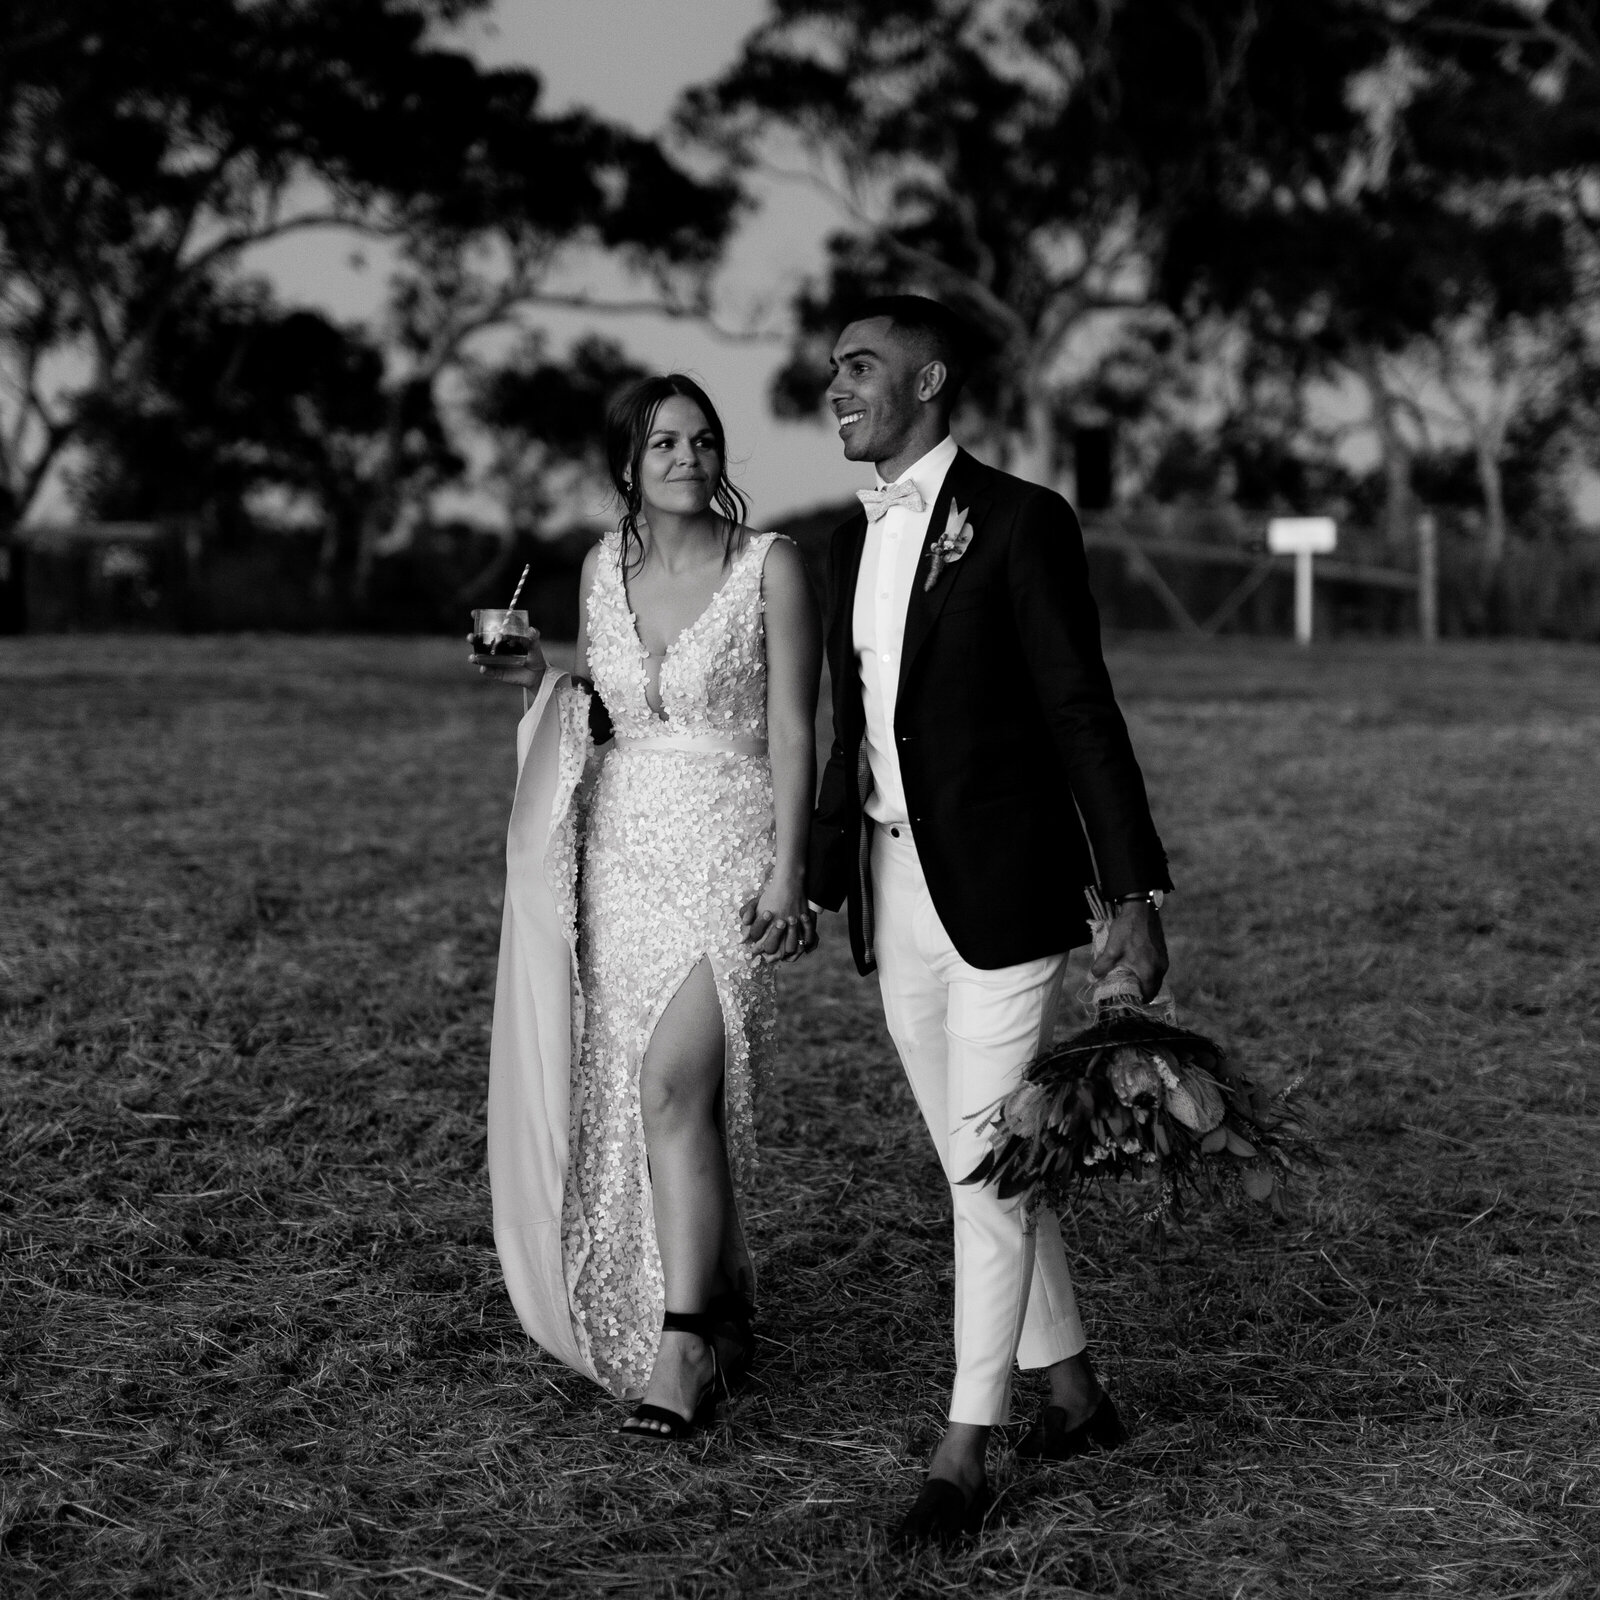 Chloe-Benny-Rexvil-Photography-Adelaide-Wedding-Photographer-496